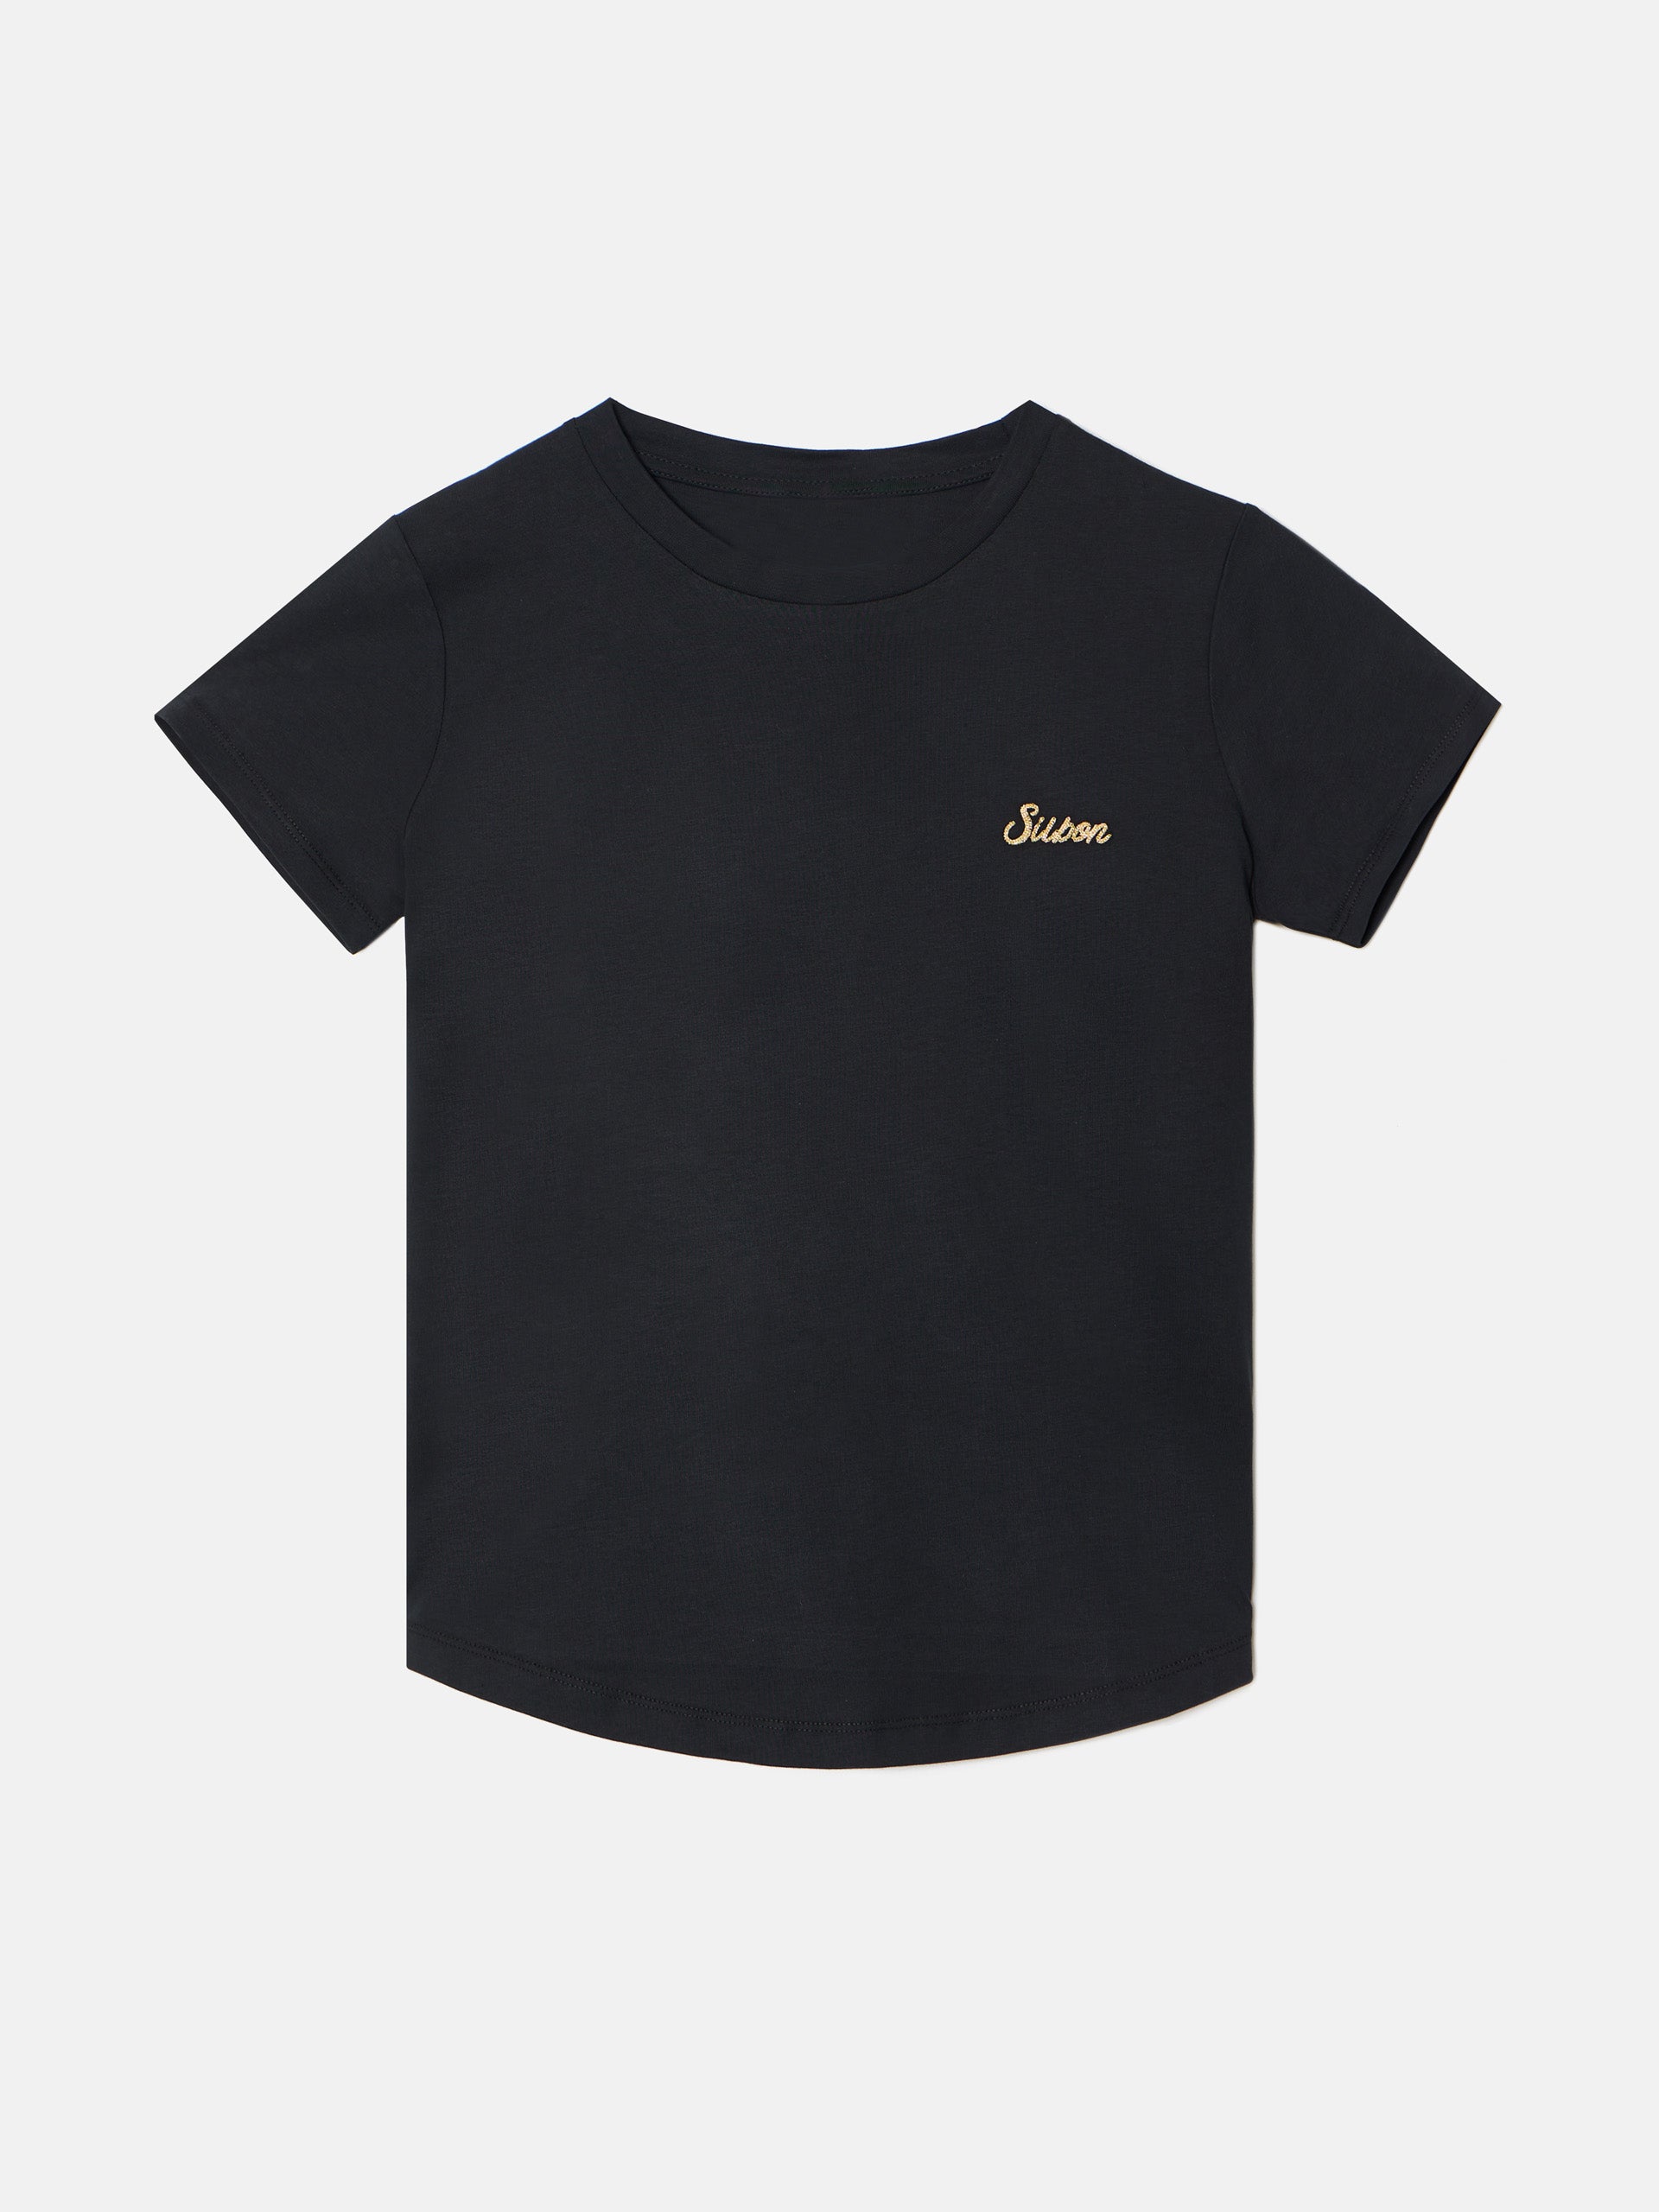 Camiseta woman silbon bordado negra